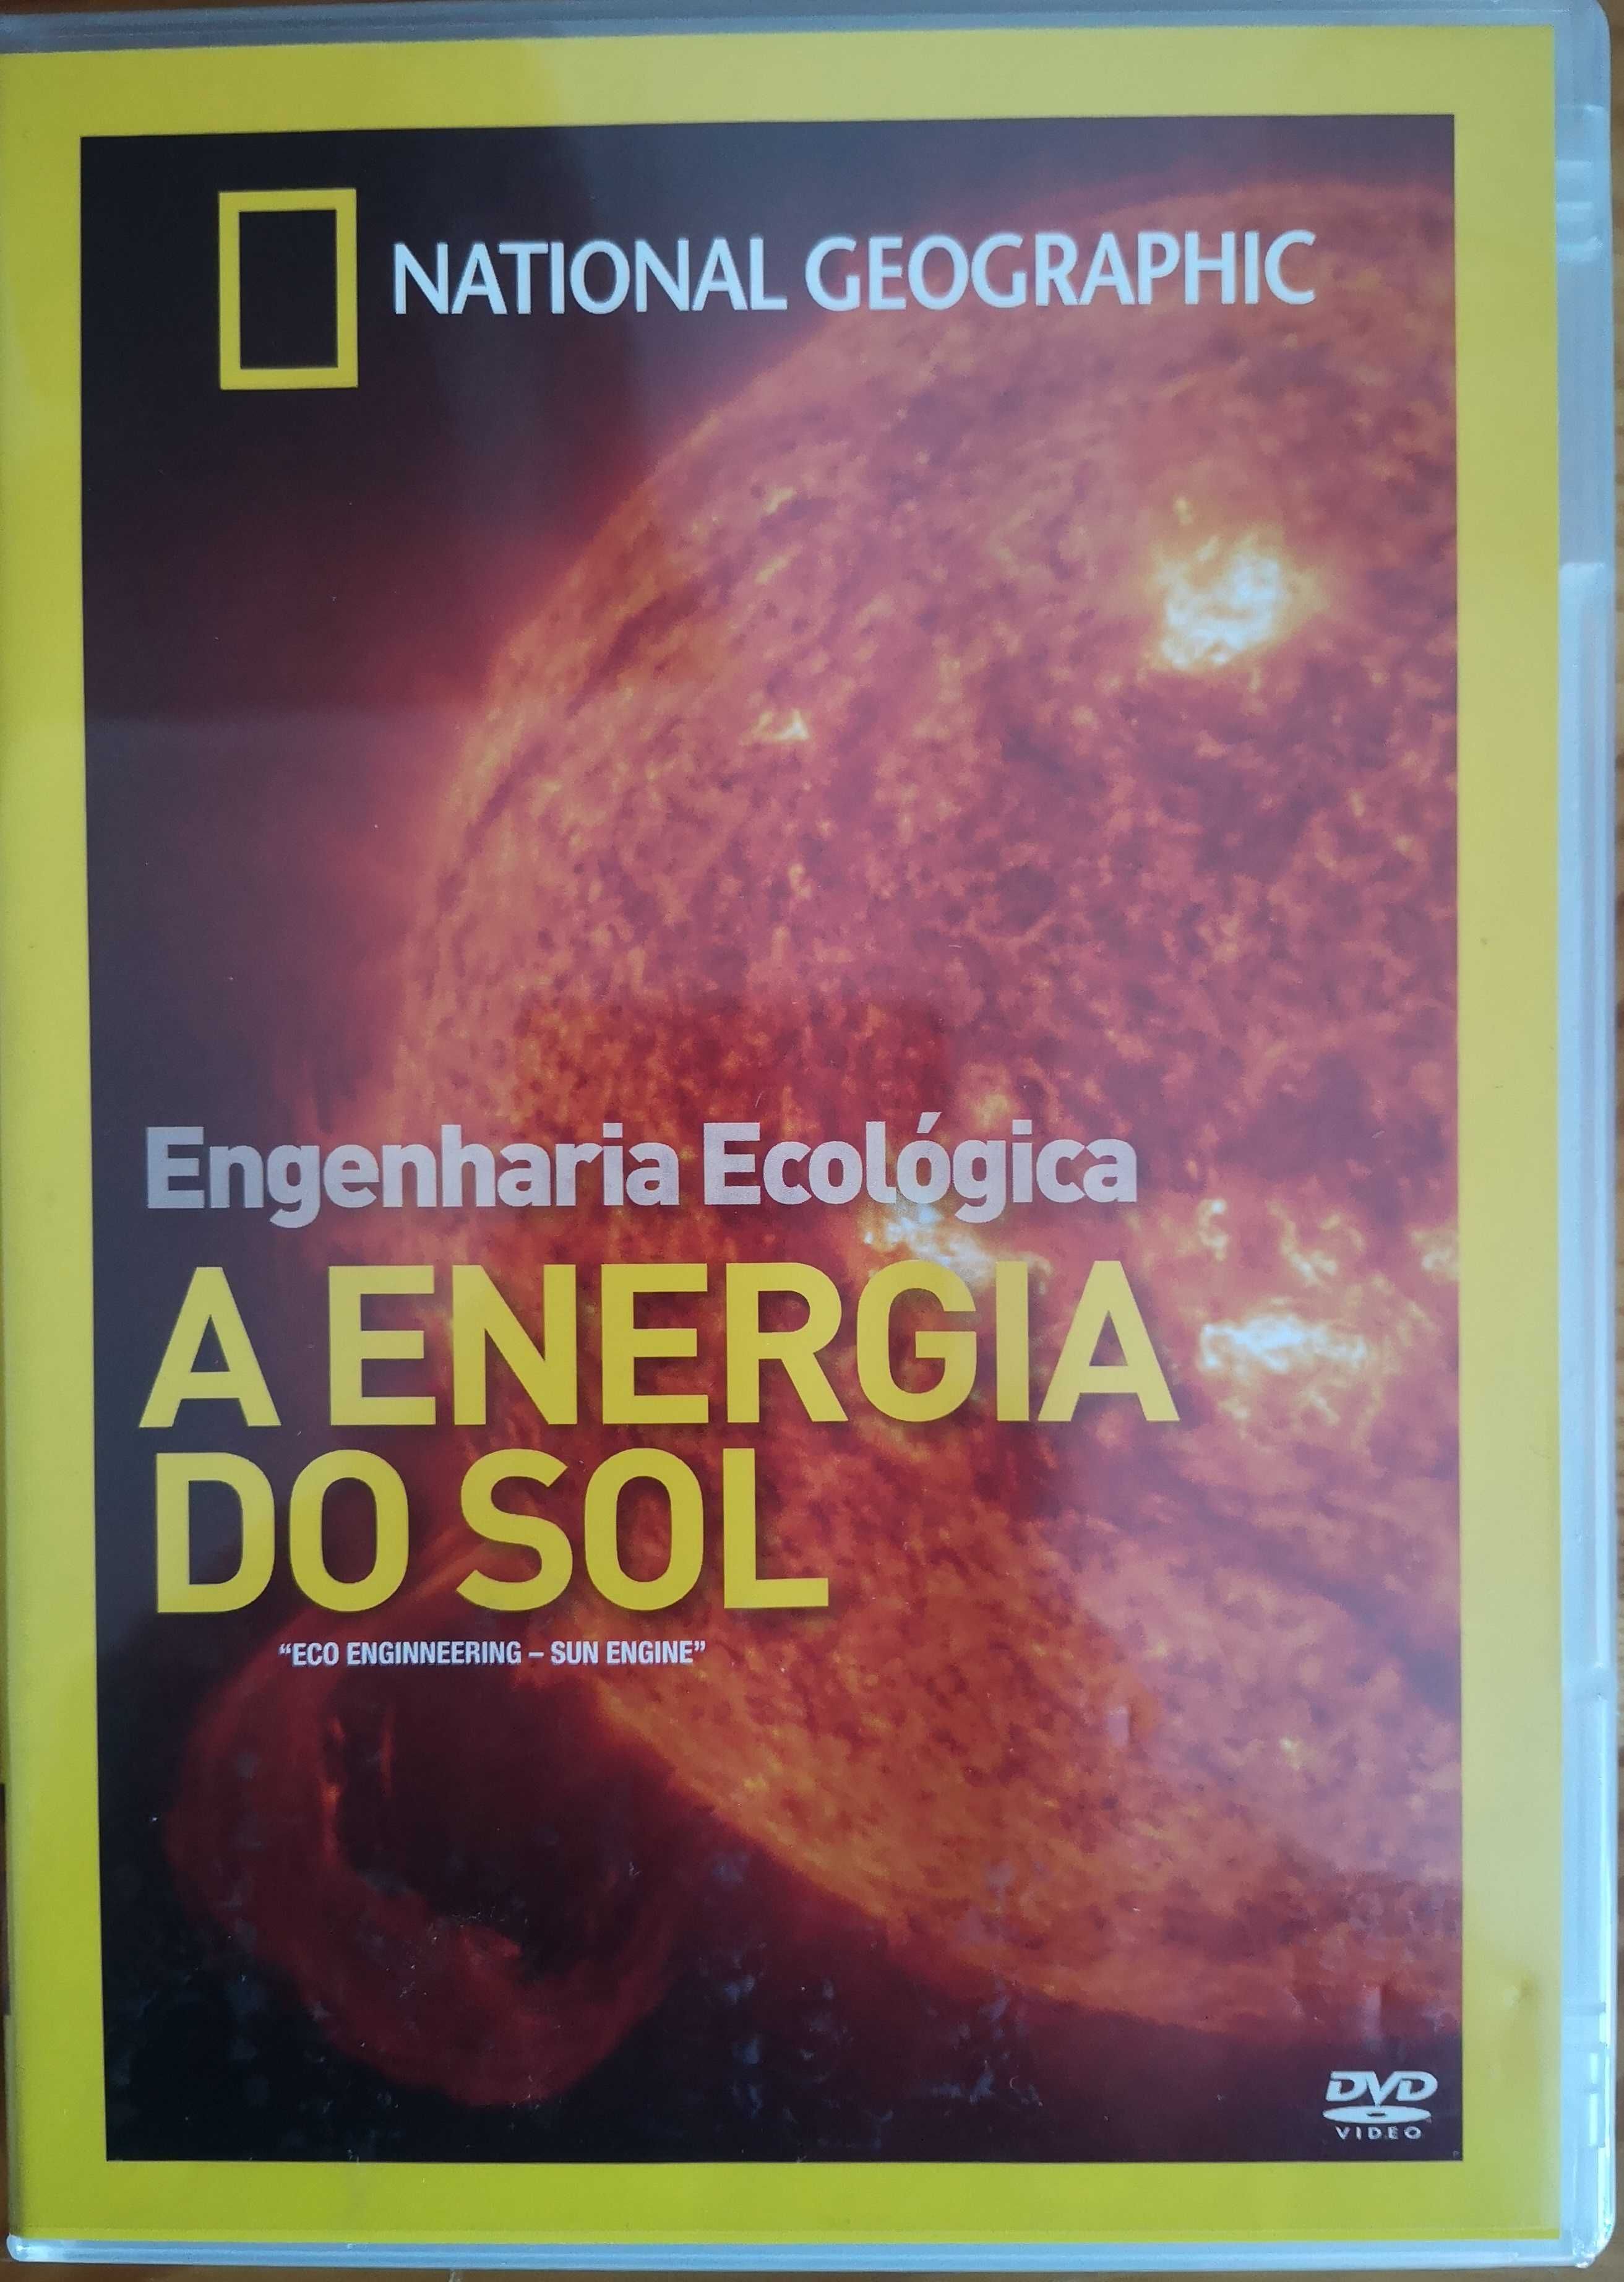 DVD "A Energia Do Sol - Engenharia Ecológica" National Geographic